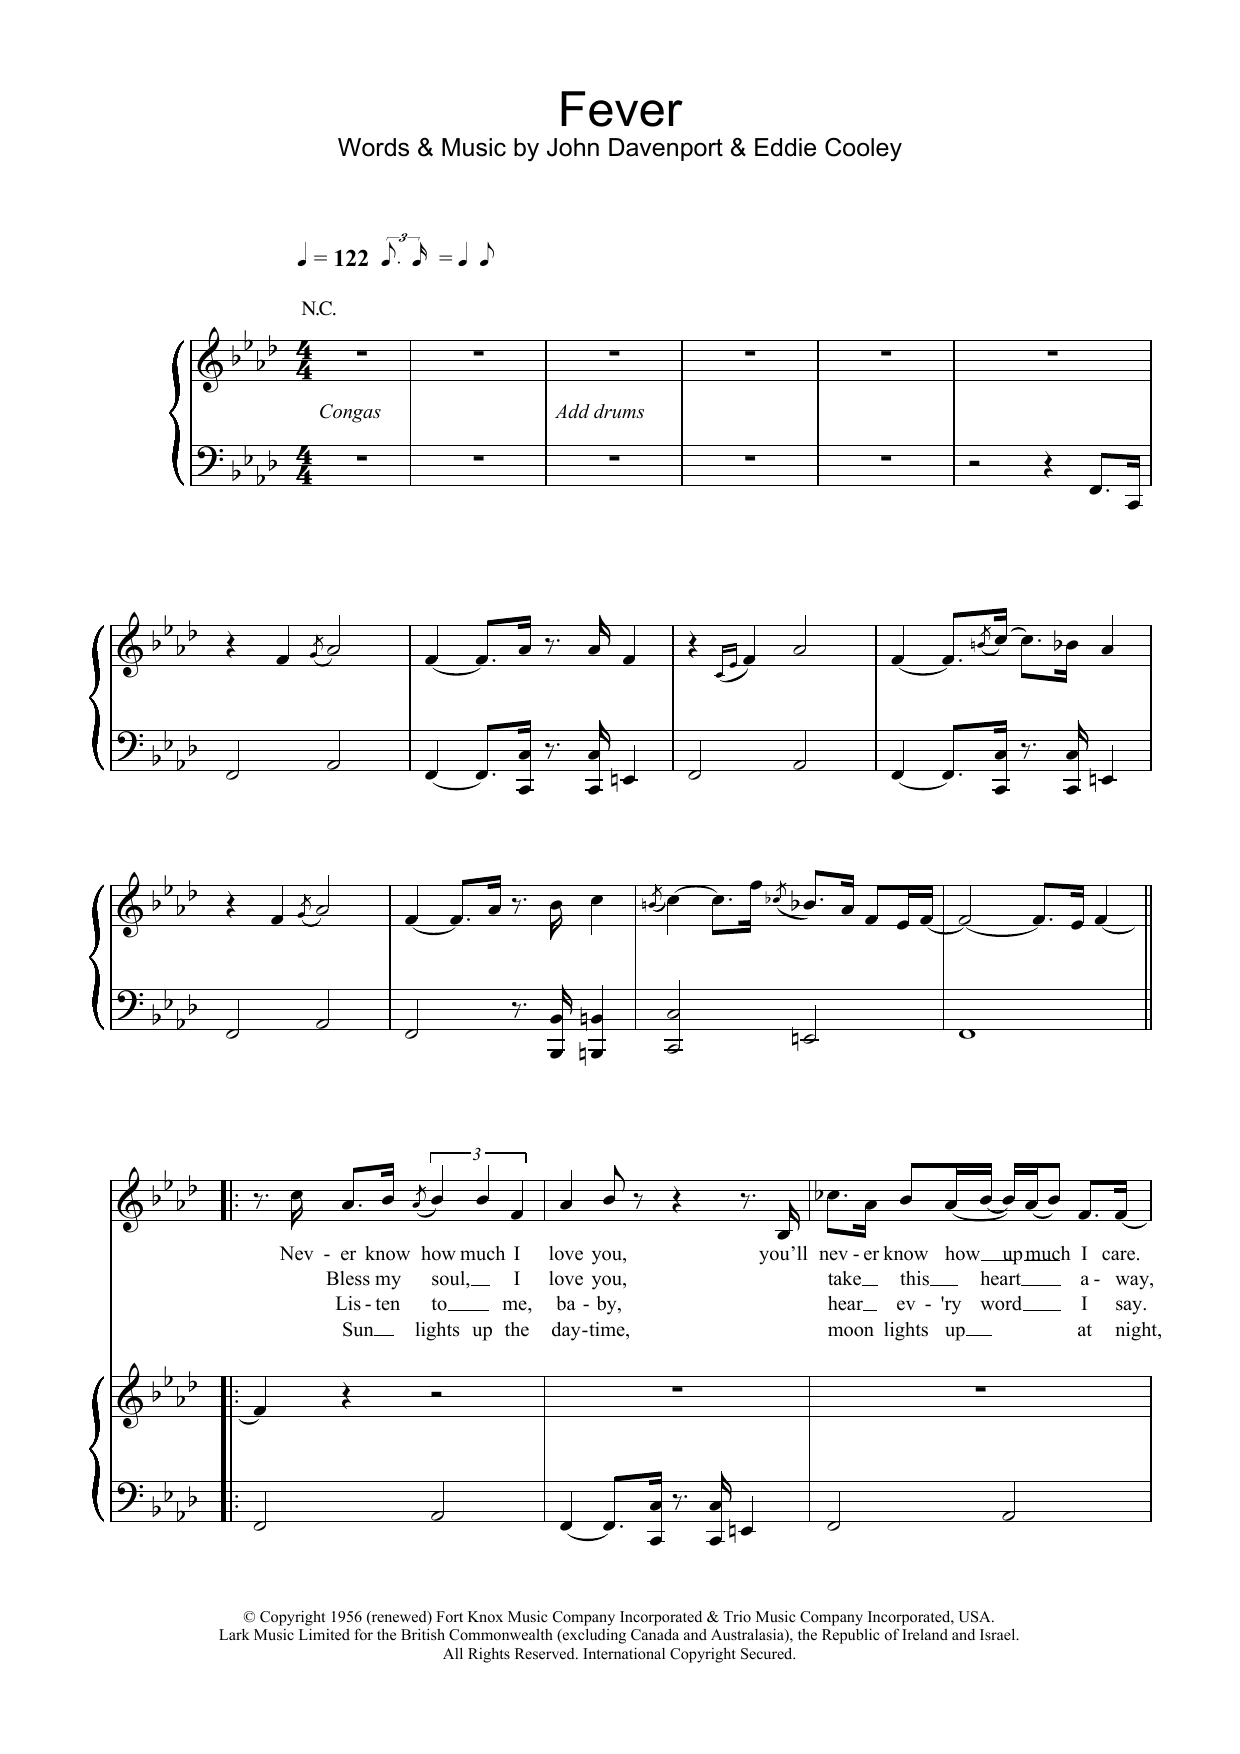 Eva Cassidy Fever Sheet Music Notes & Chords for Piano, Vocal & Guitar - Download or Print PDF